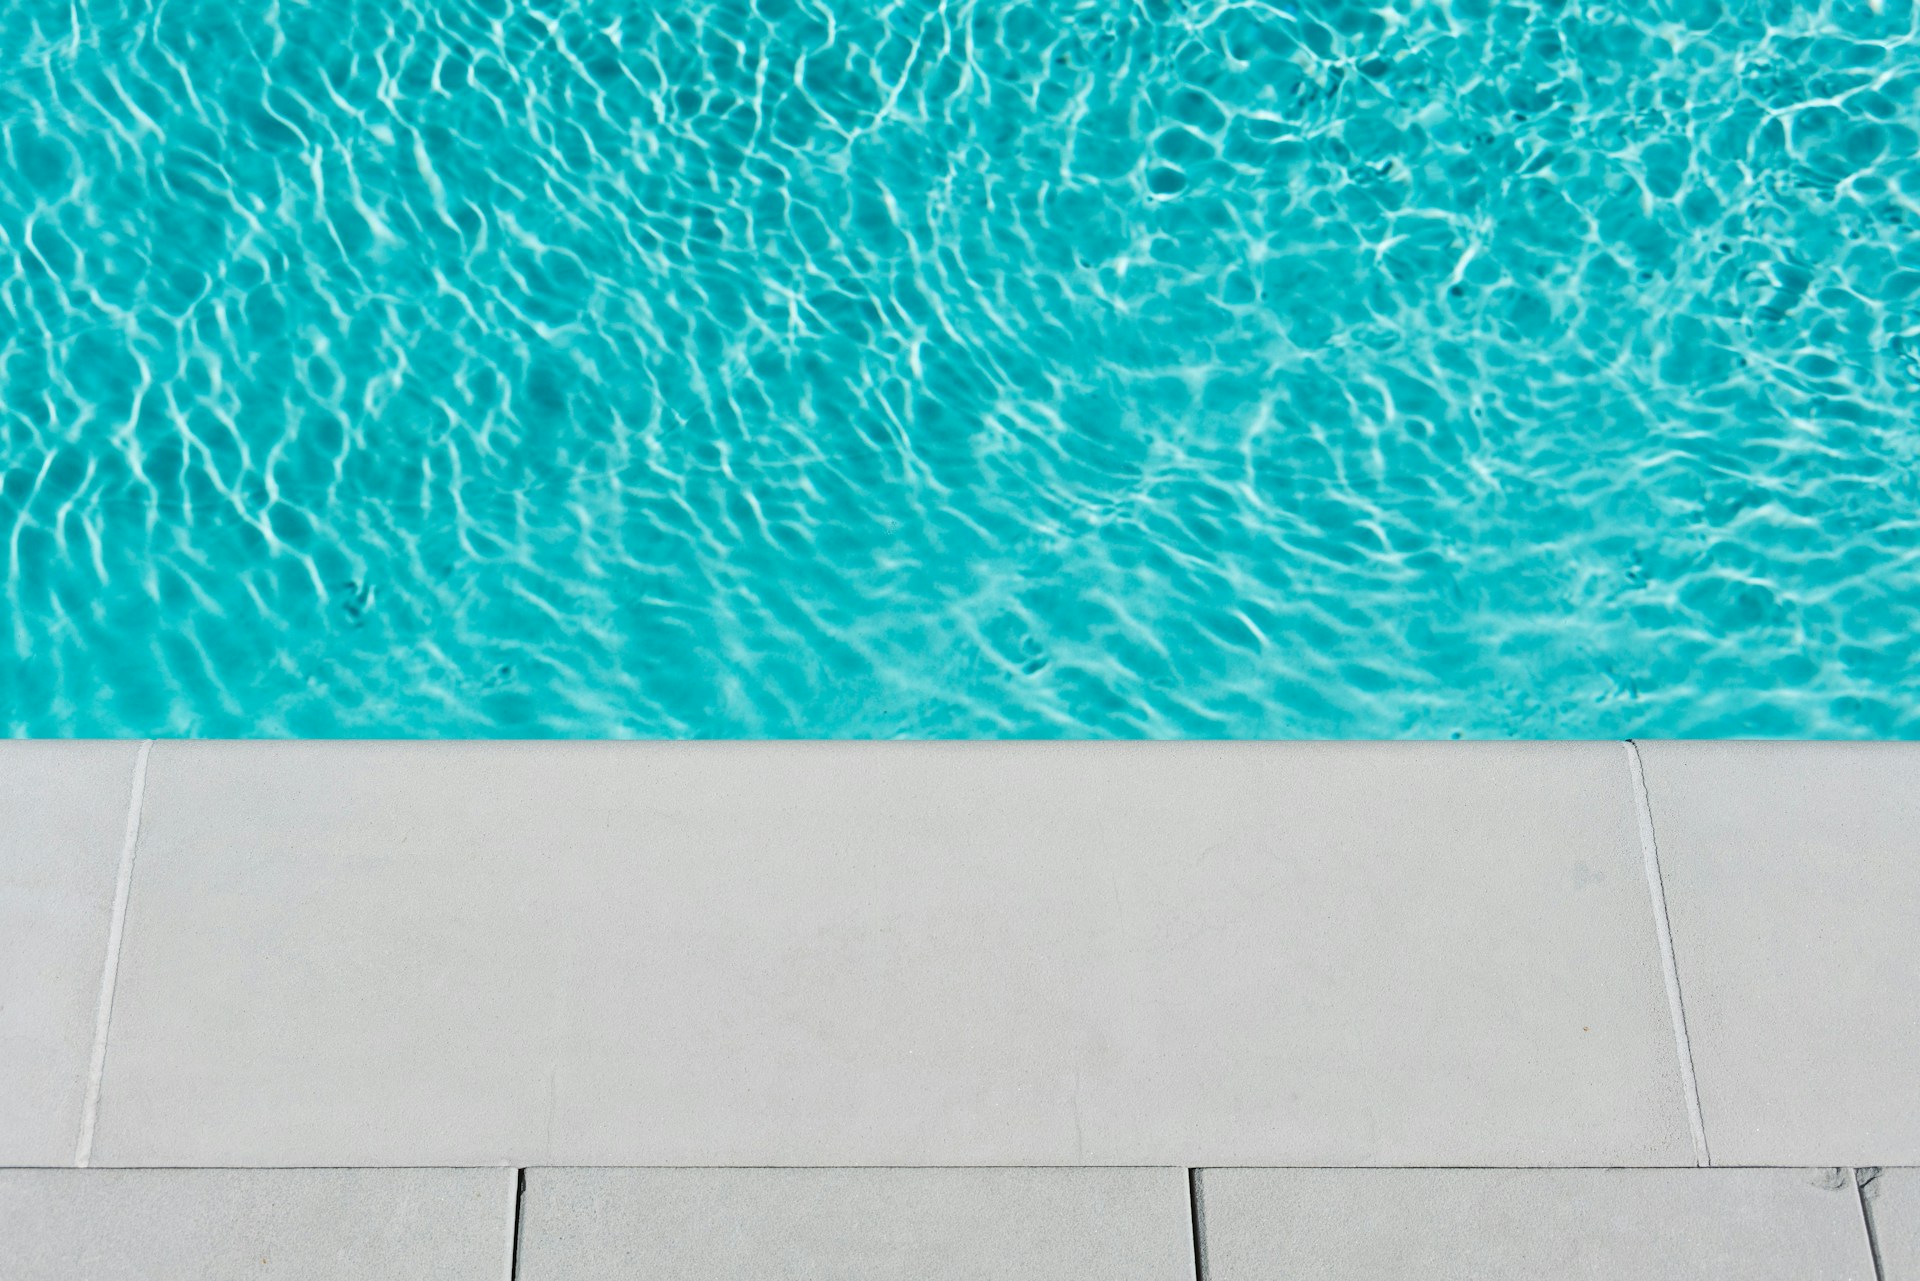 blue swimming pool